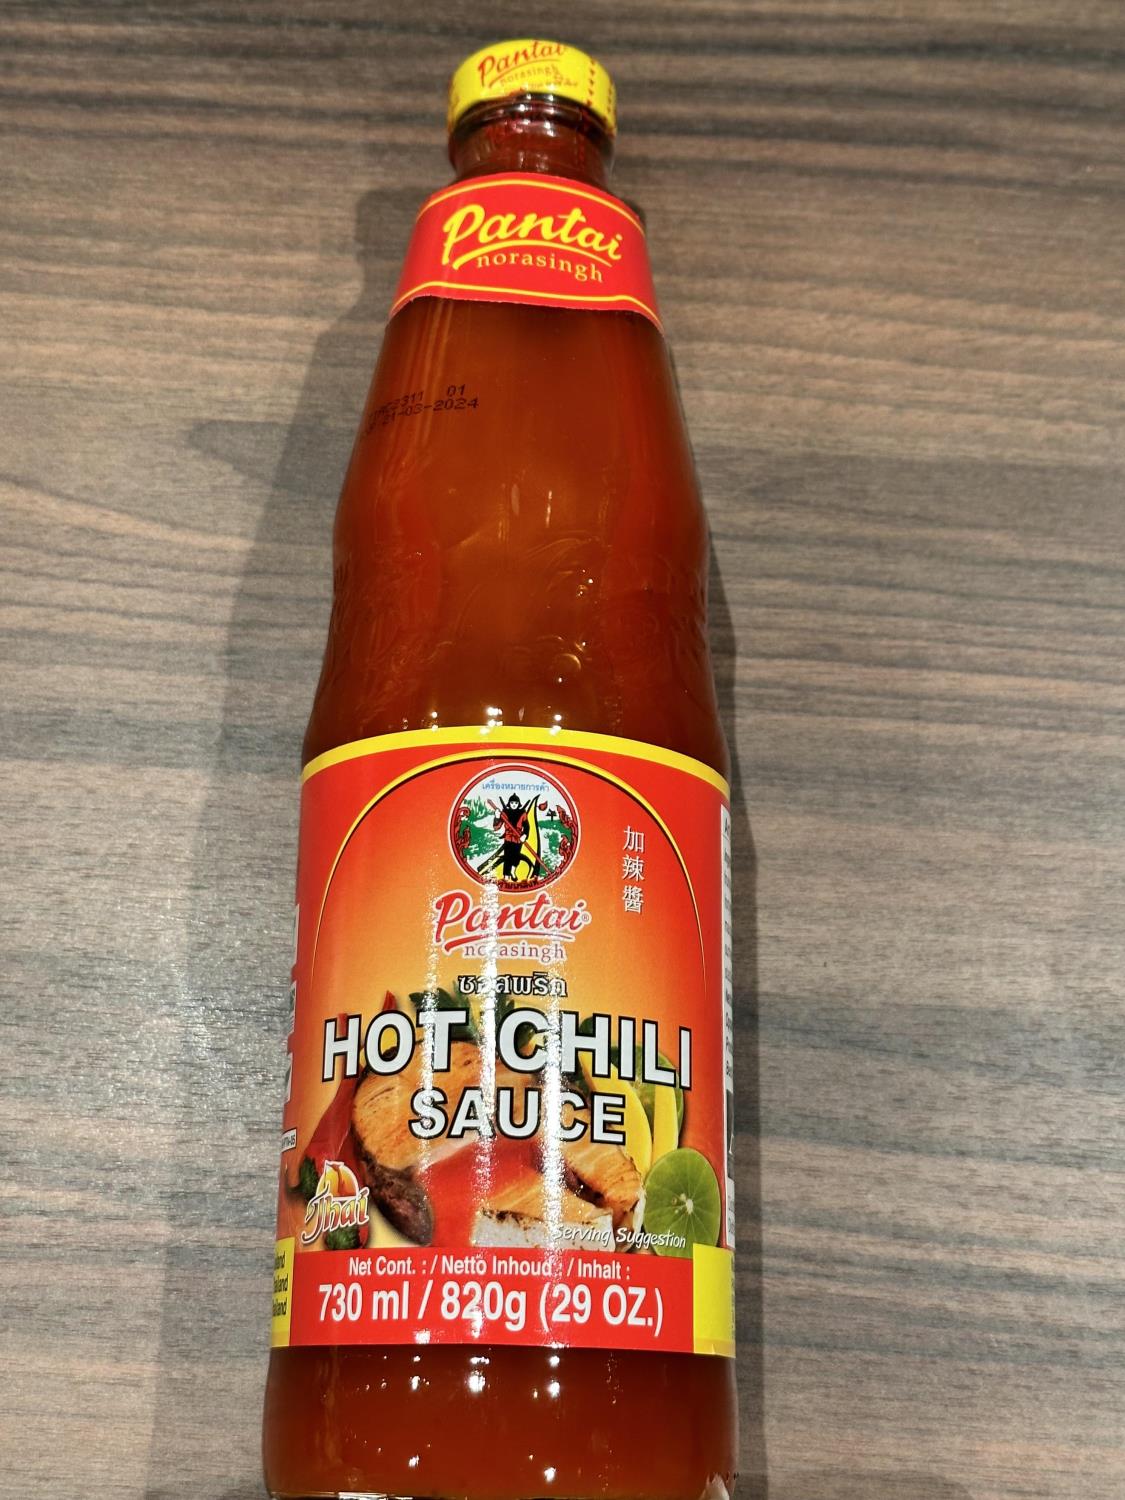 Hot Chilli sauce